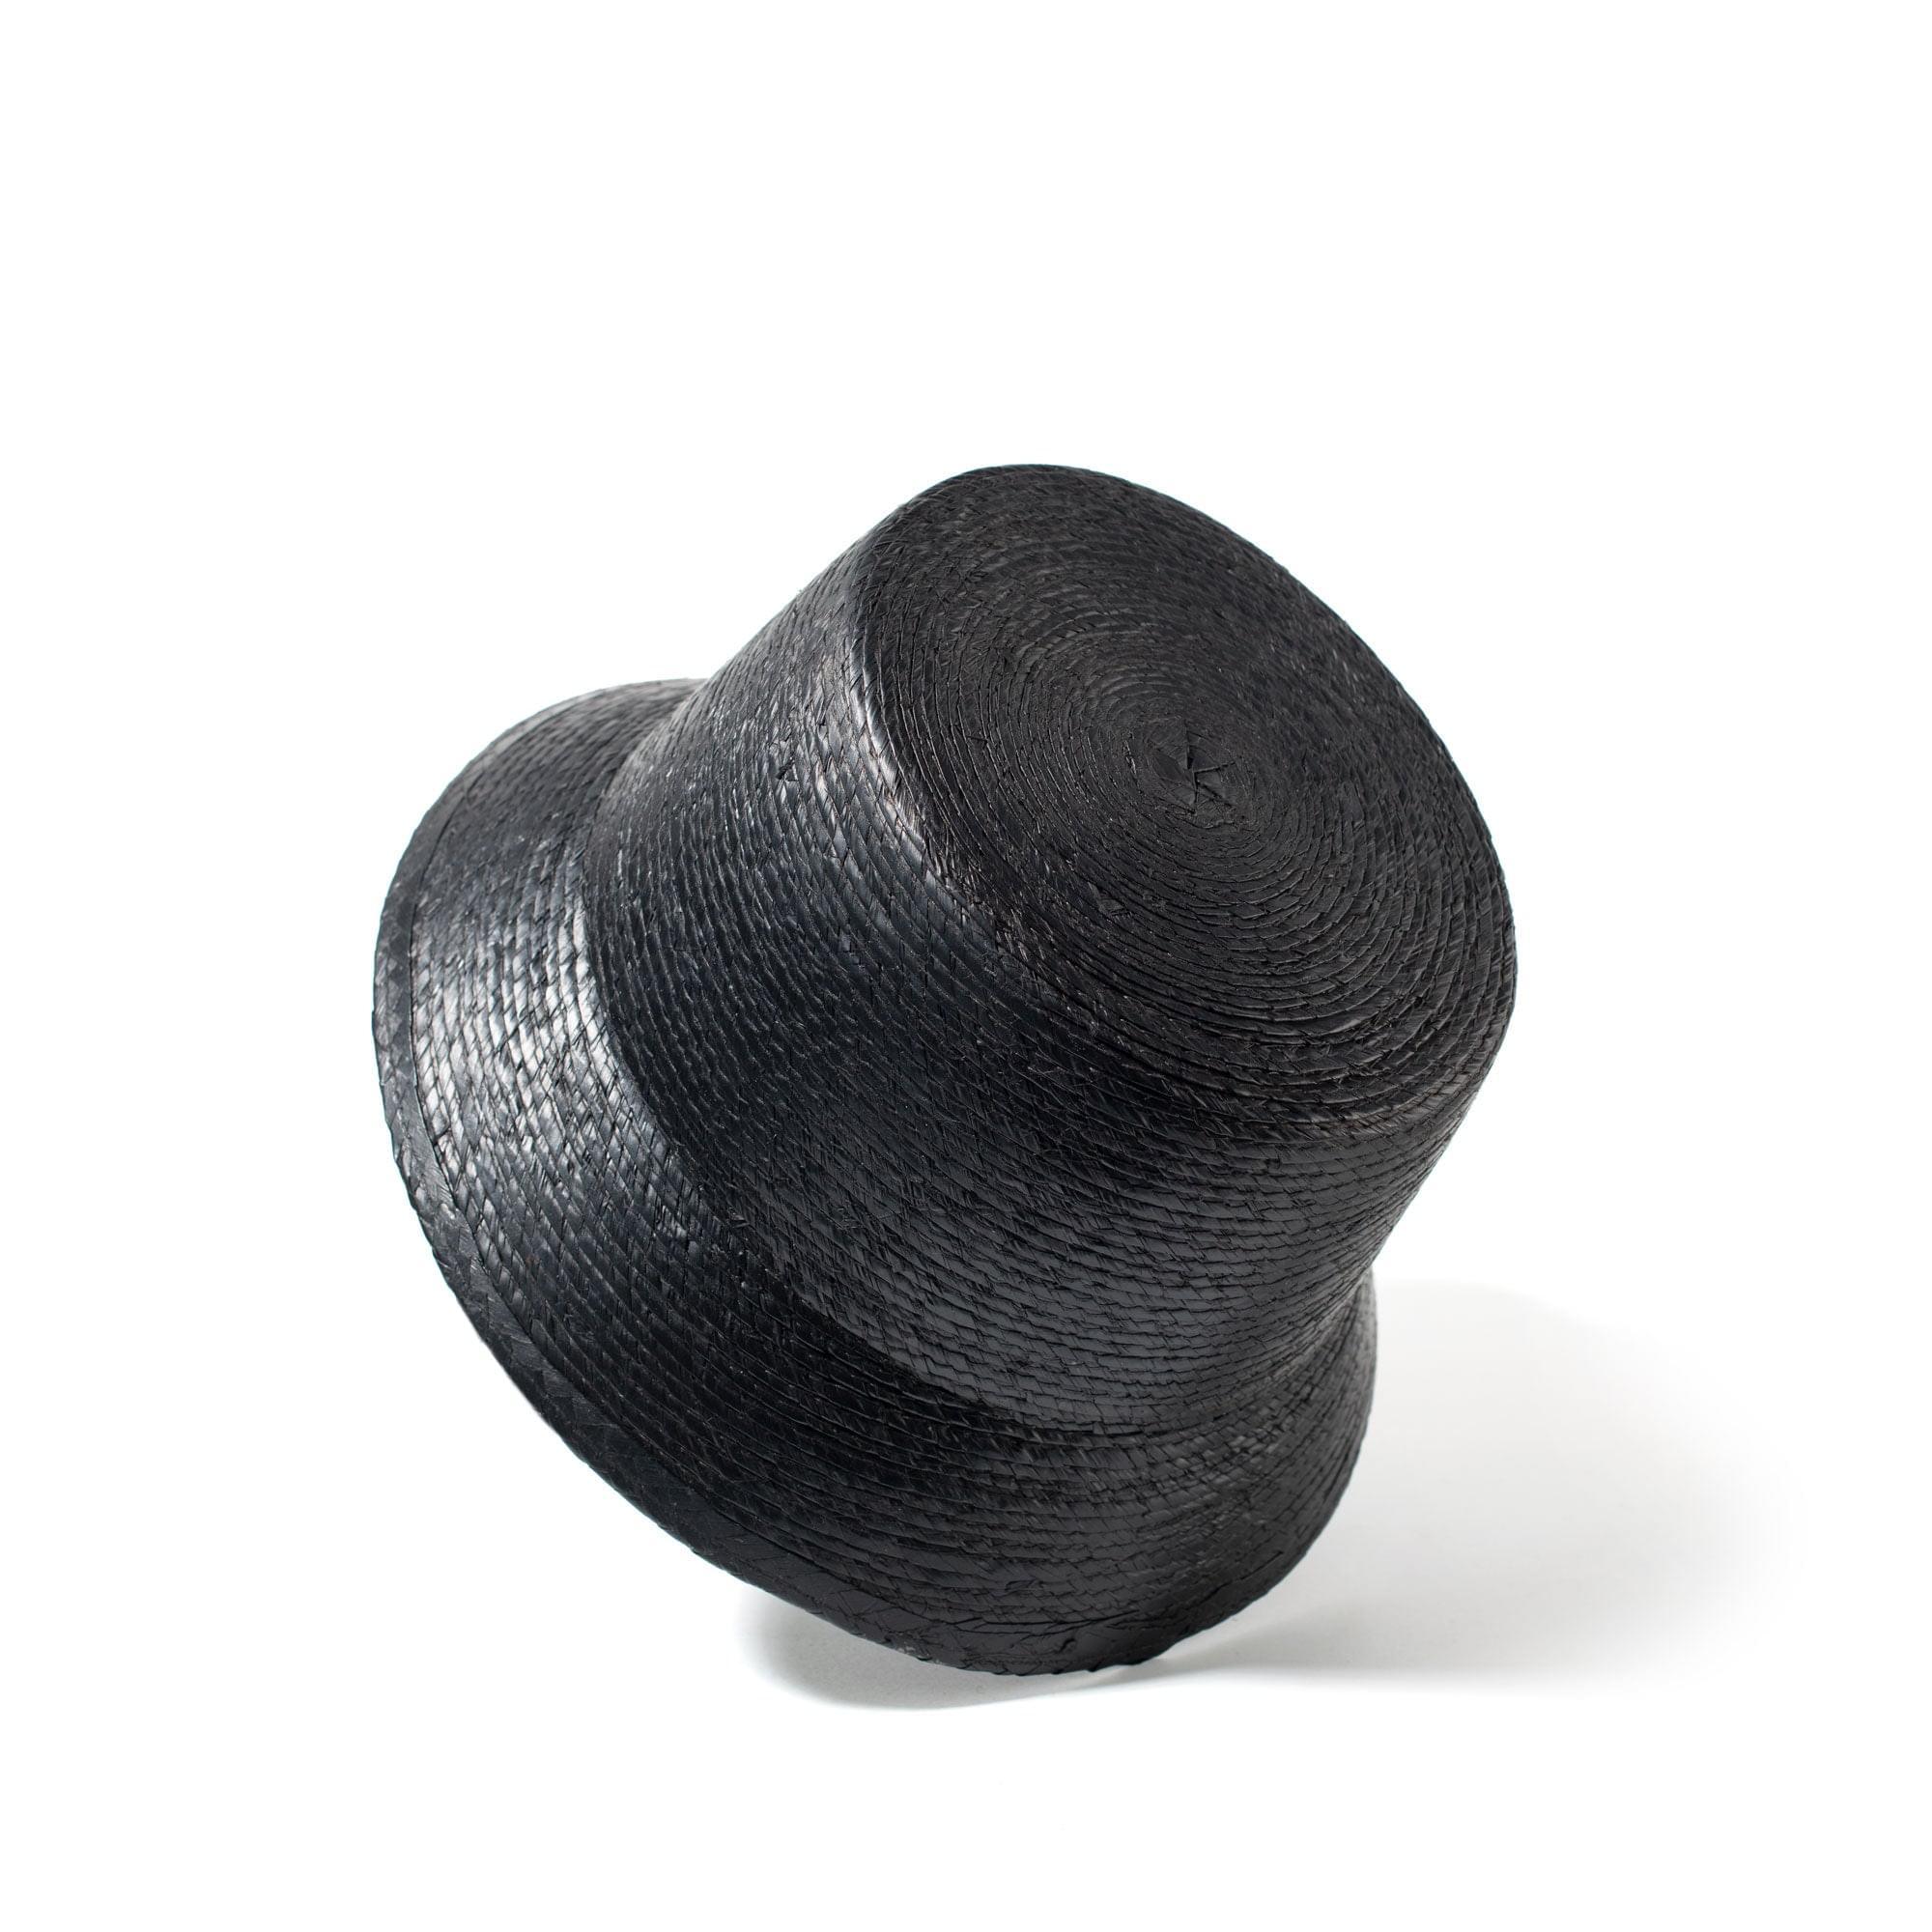 Palma Bucket Hat - Black